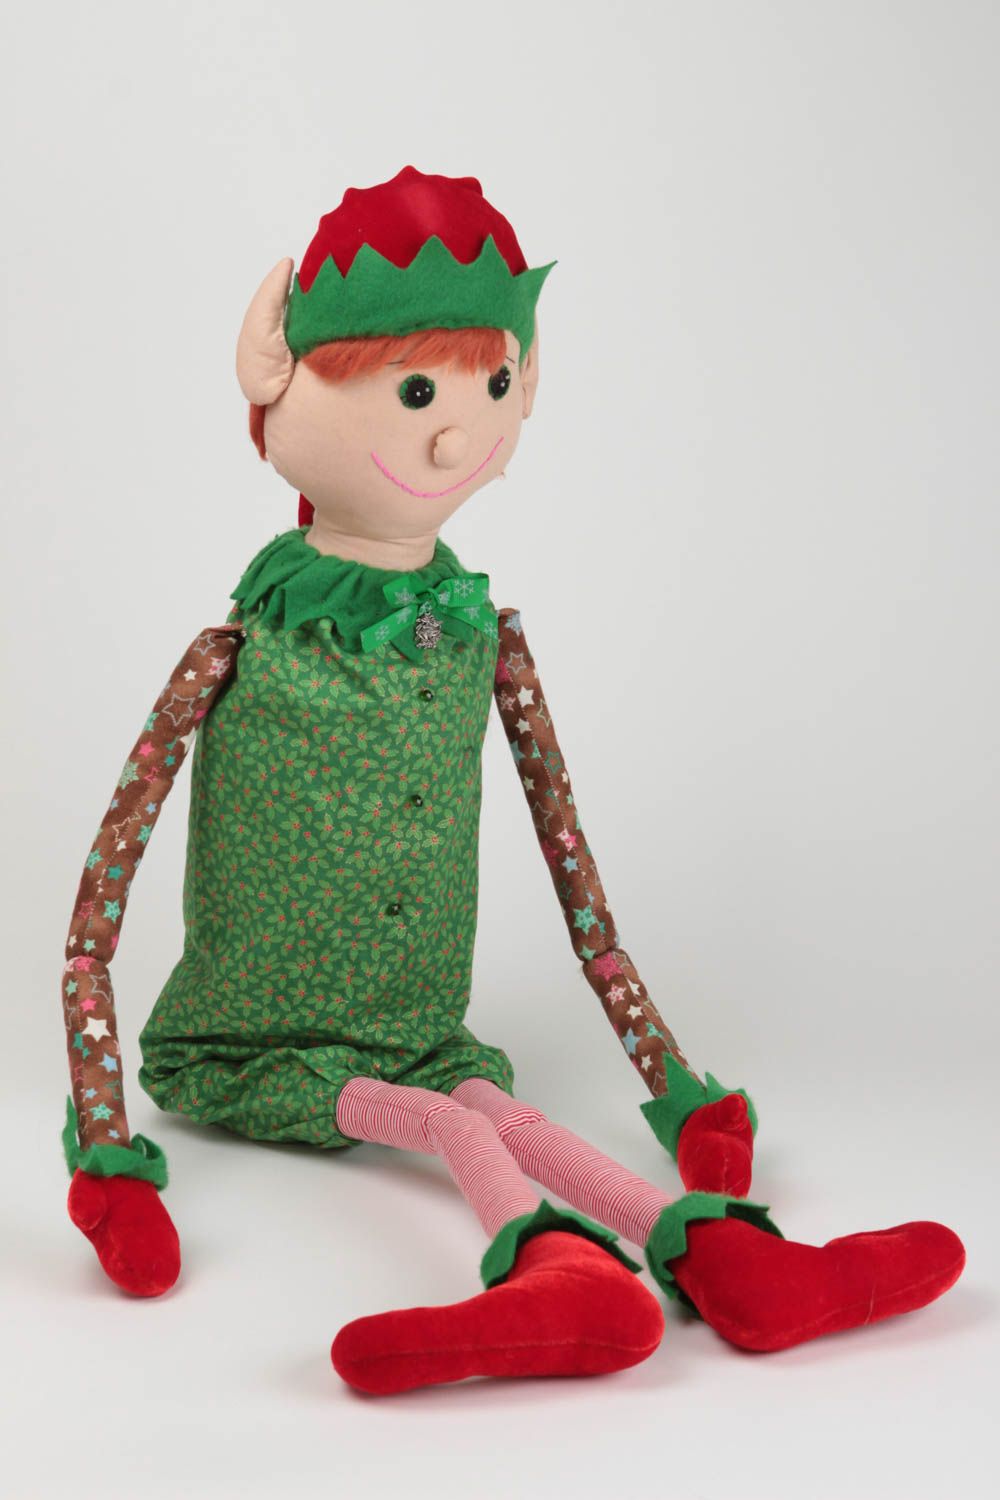 Handmade soft toy interior rag doll interior decorating gift ideas for kids photo 1